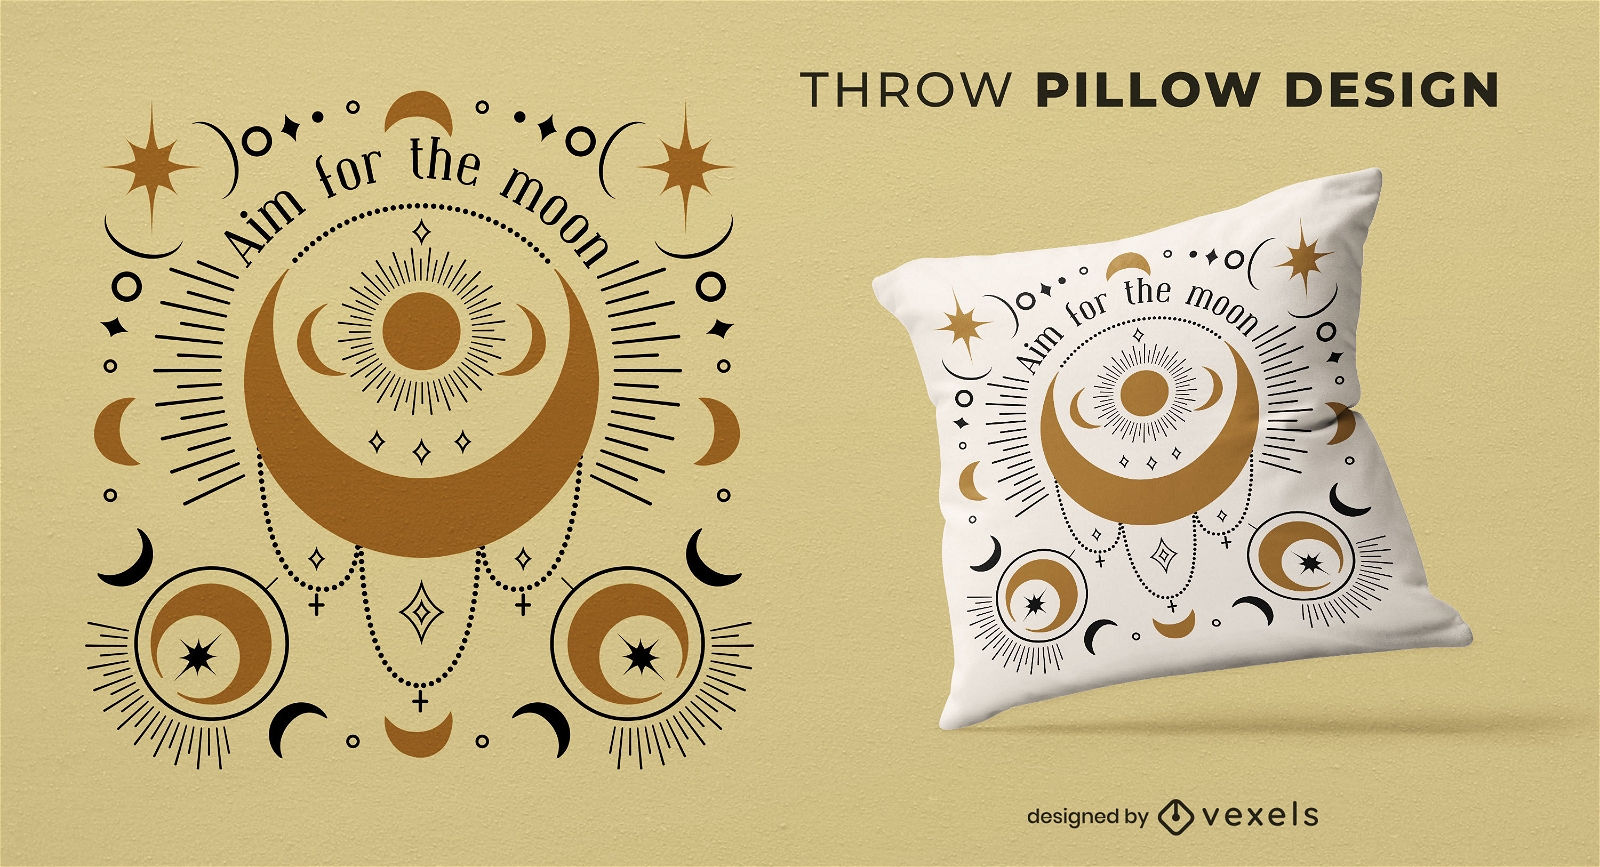 Aim for the moon throw pillow design